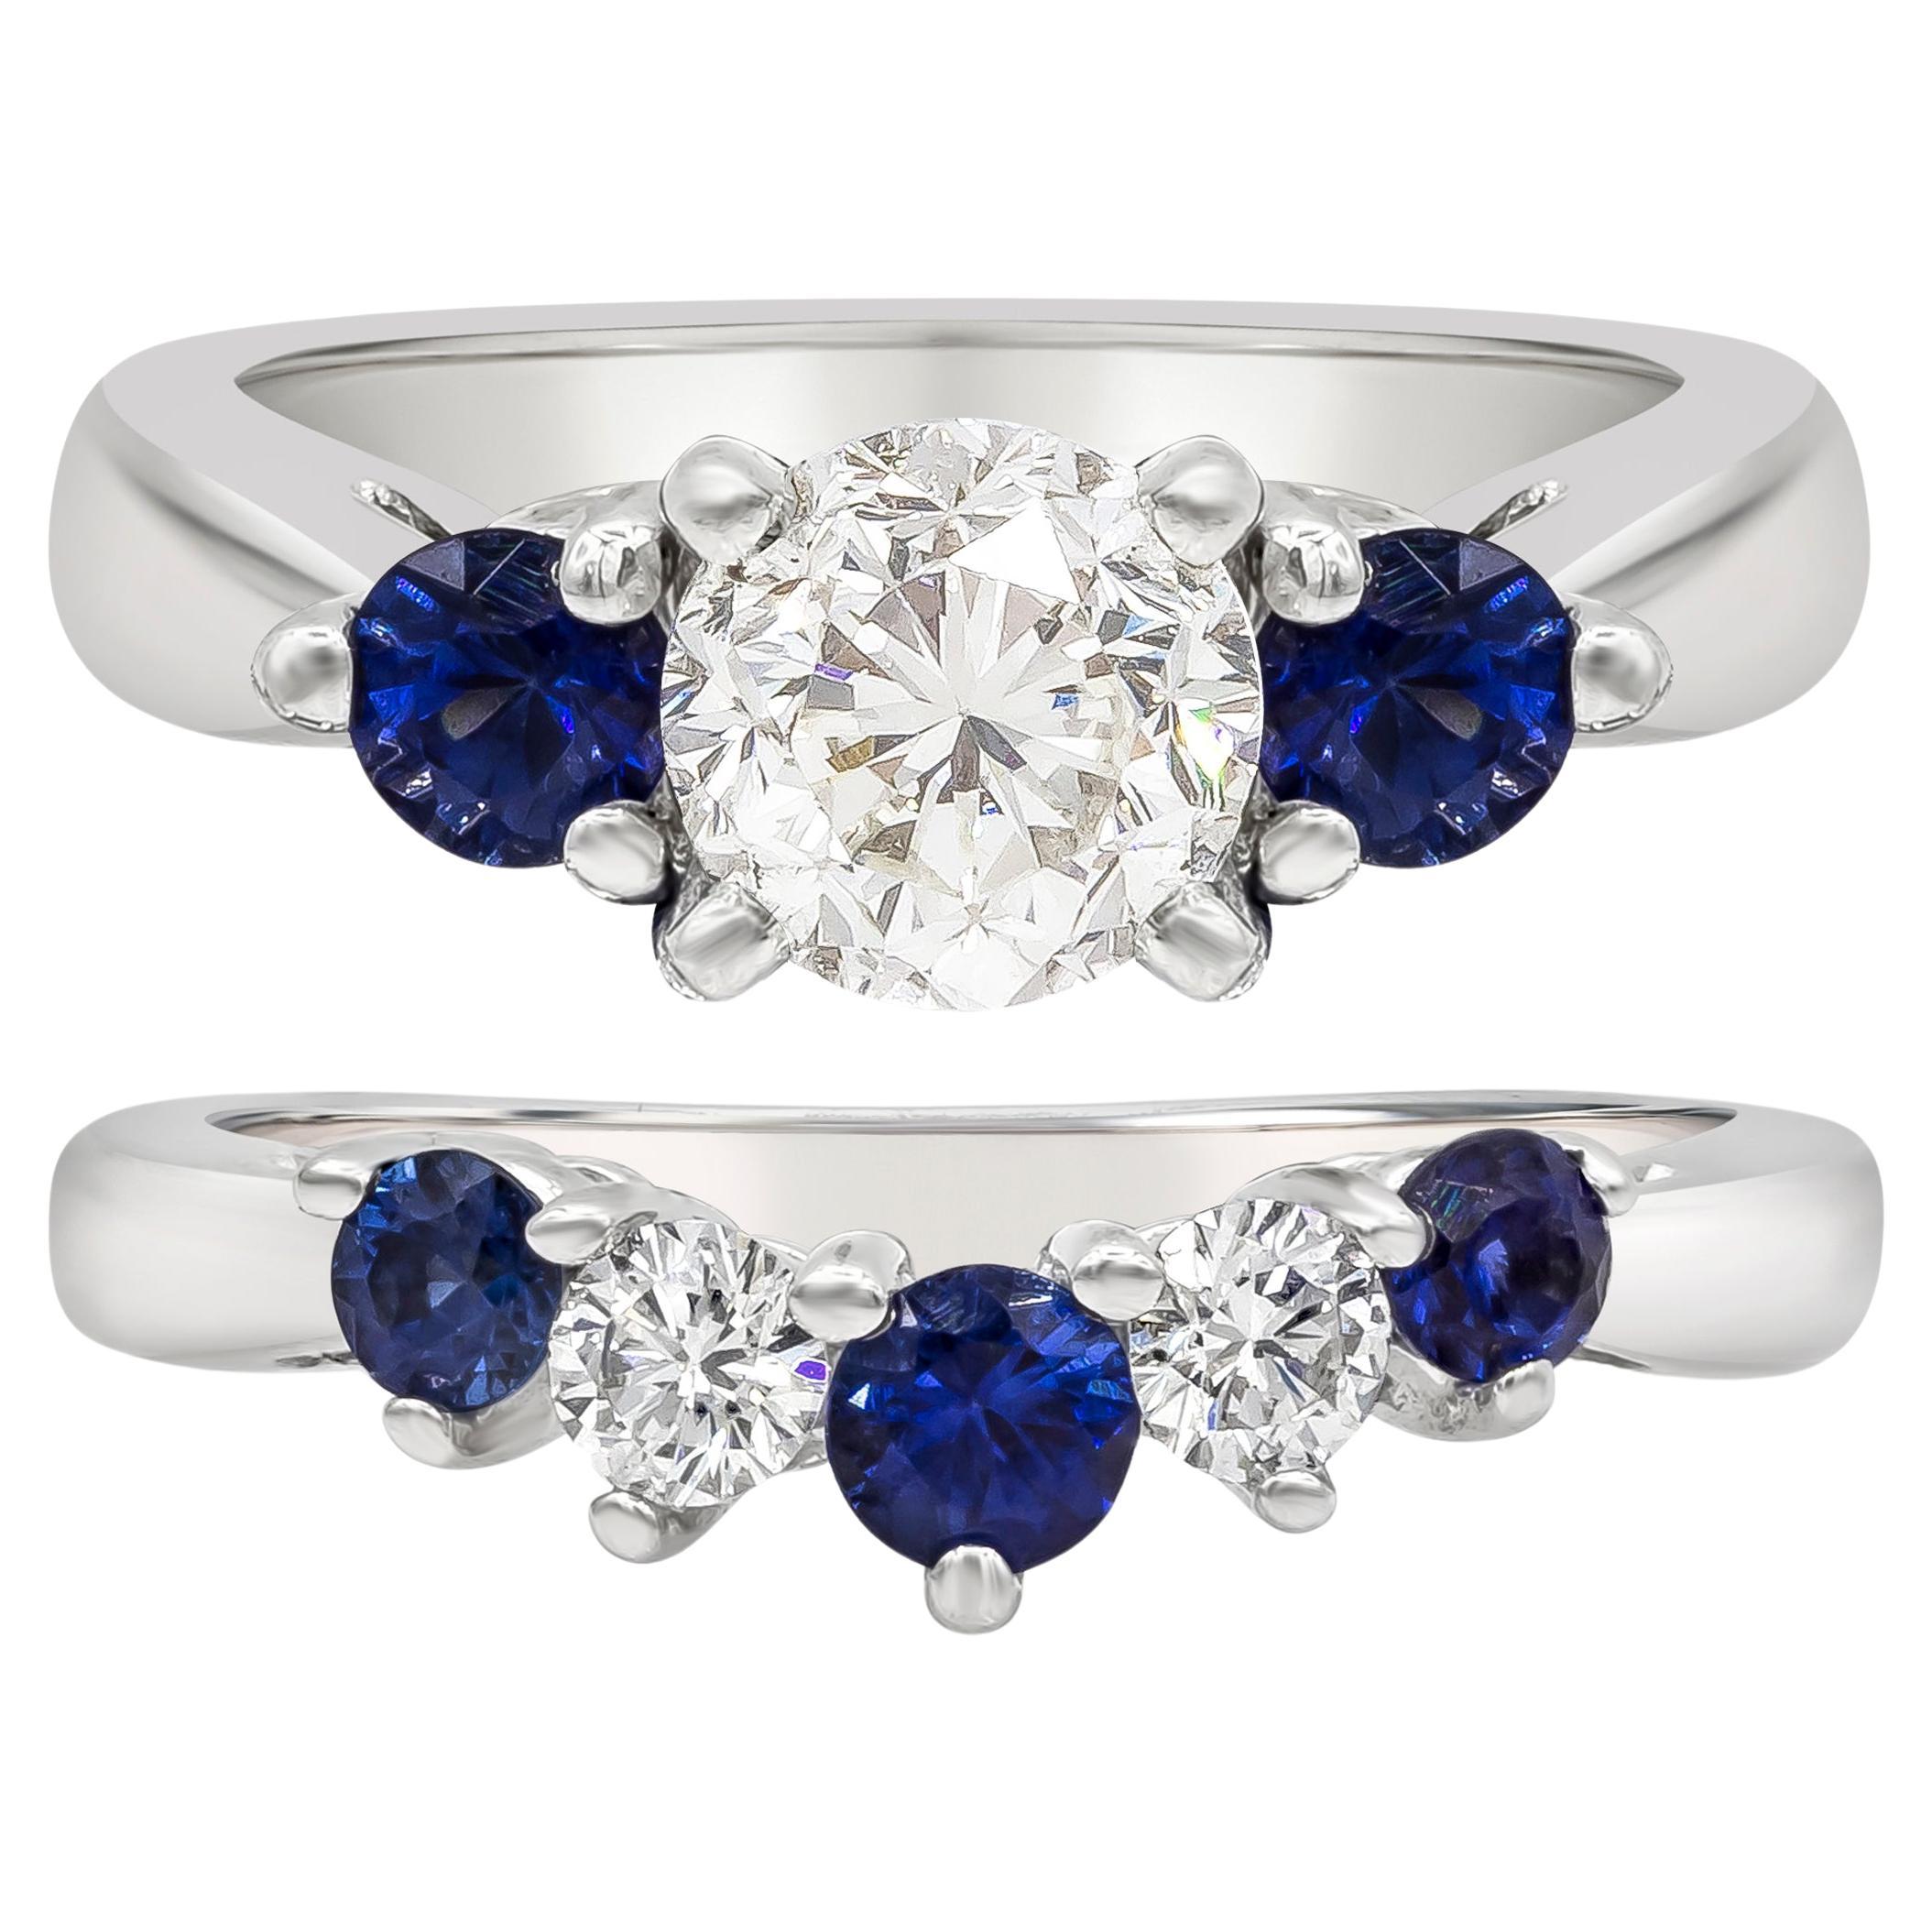 1.89 Carats Total Diamond & Blue Sapphire Engagement Ring & Wedding Band Set